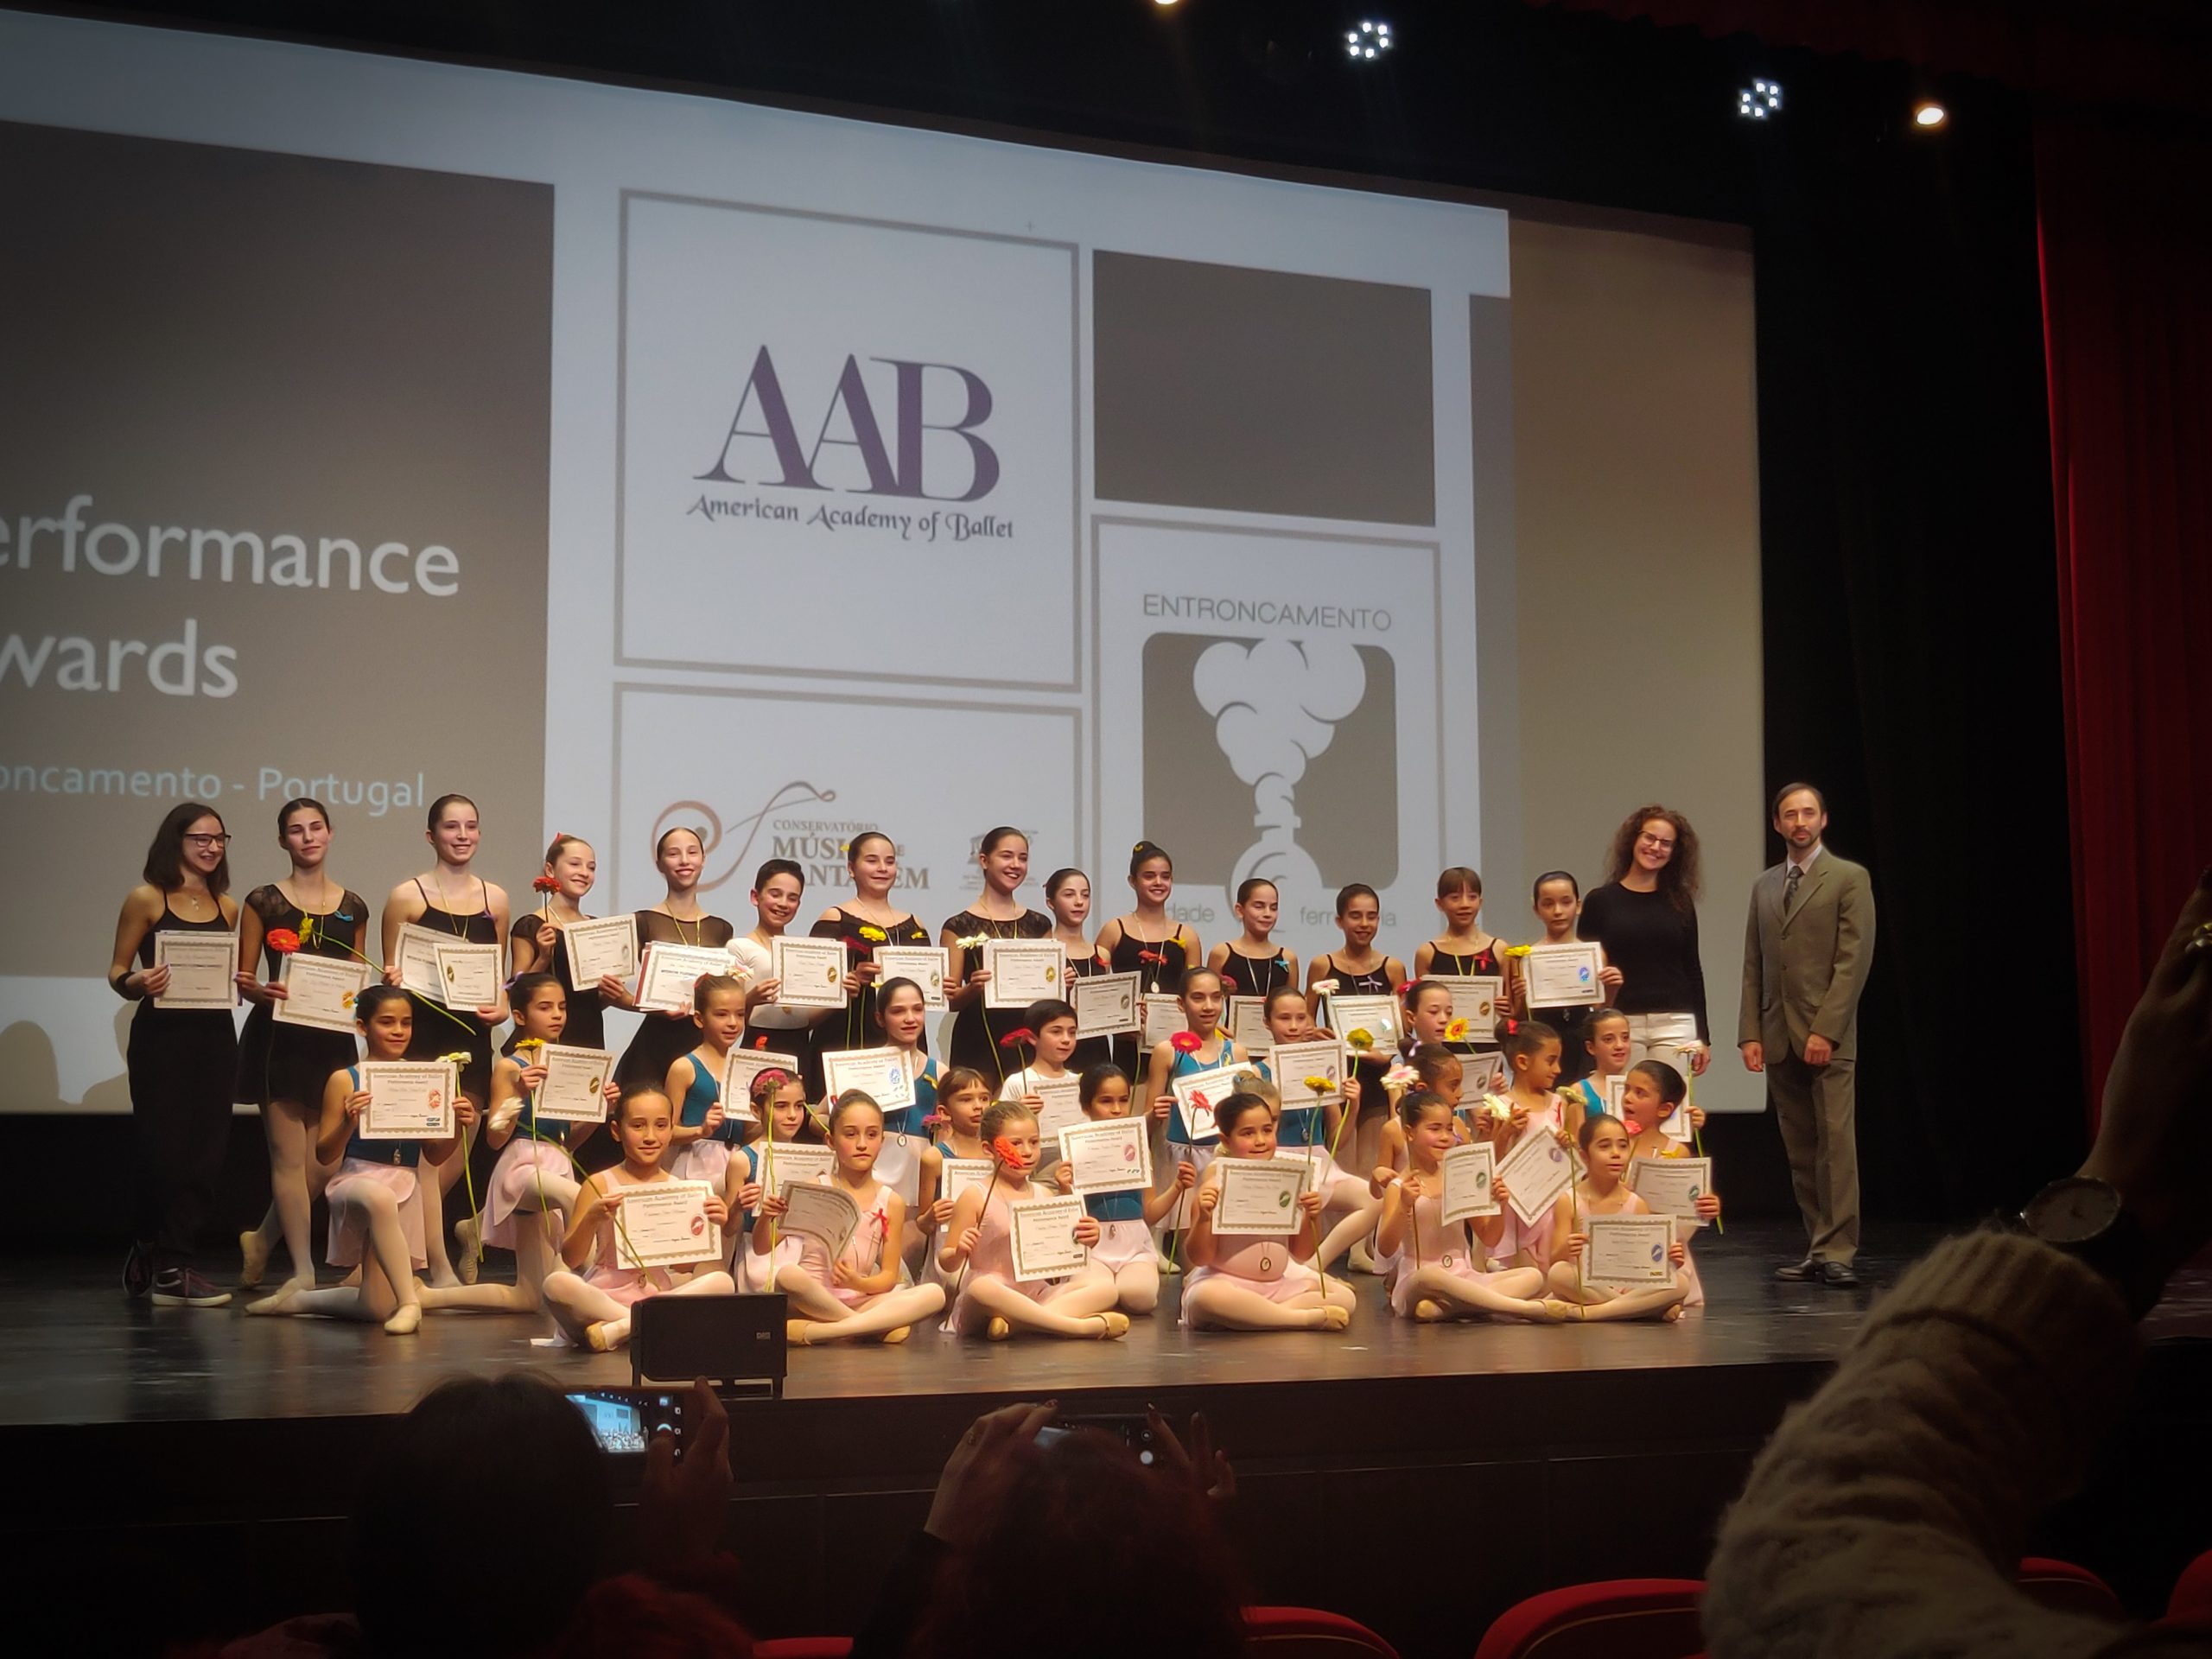 Bailarinos batalhenses premiados no “Performance Awards” da American Academy of Ballet